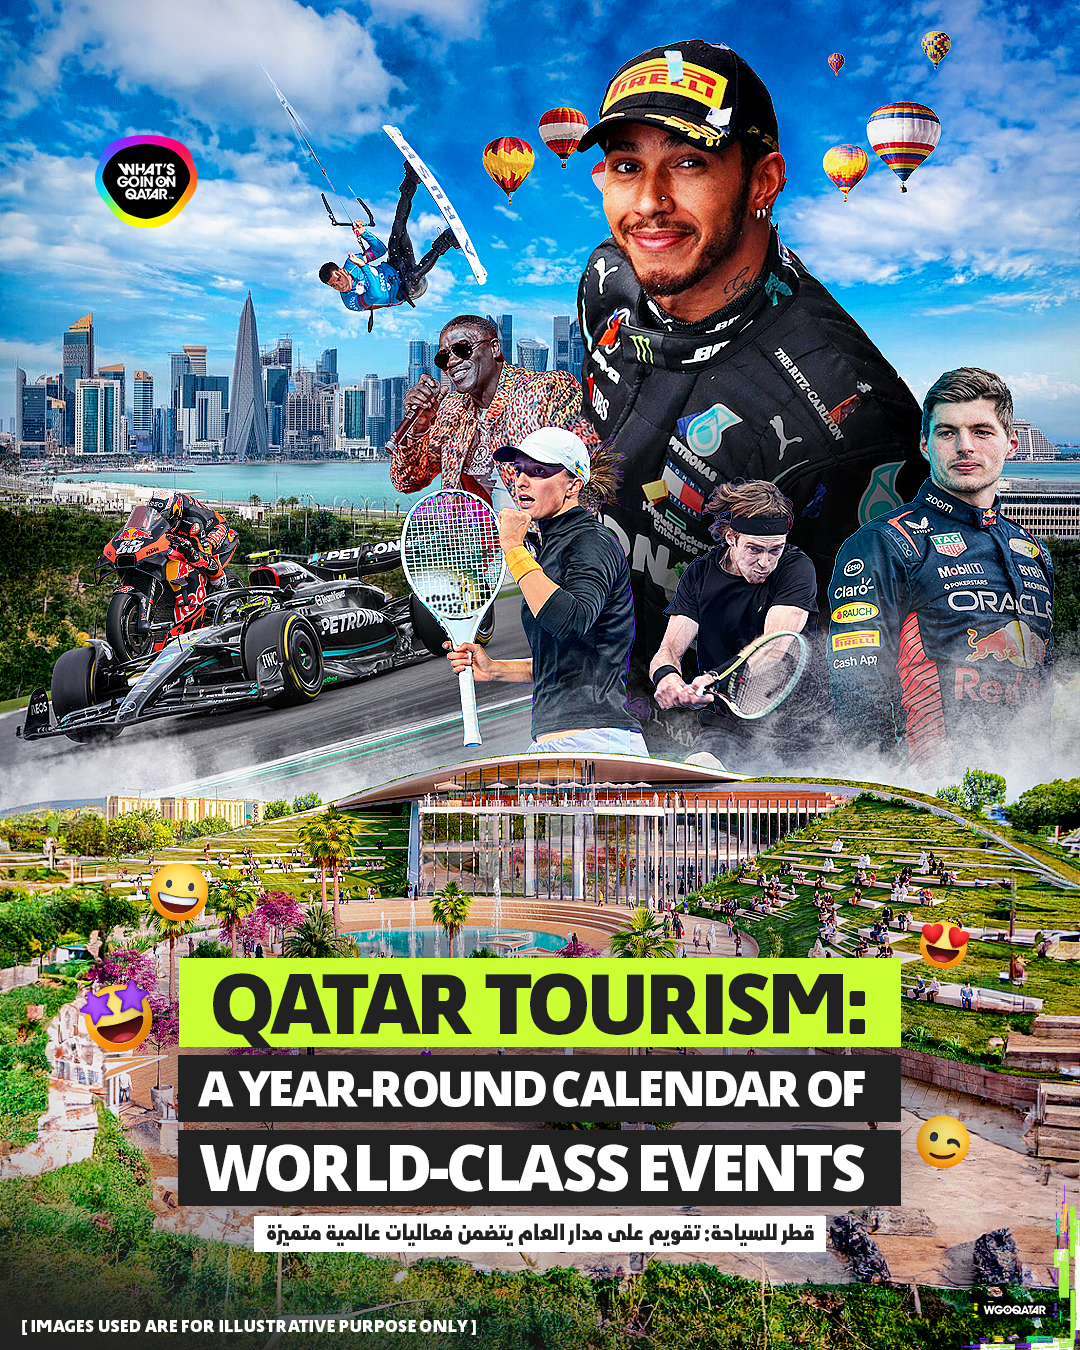 Qatar Tourism: A year-round calendar of world-class events